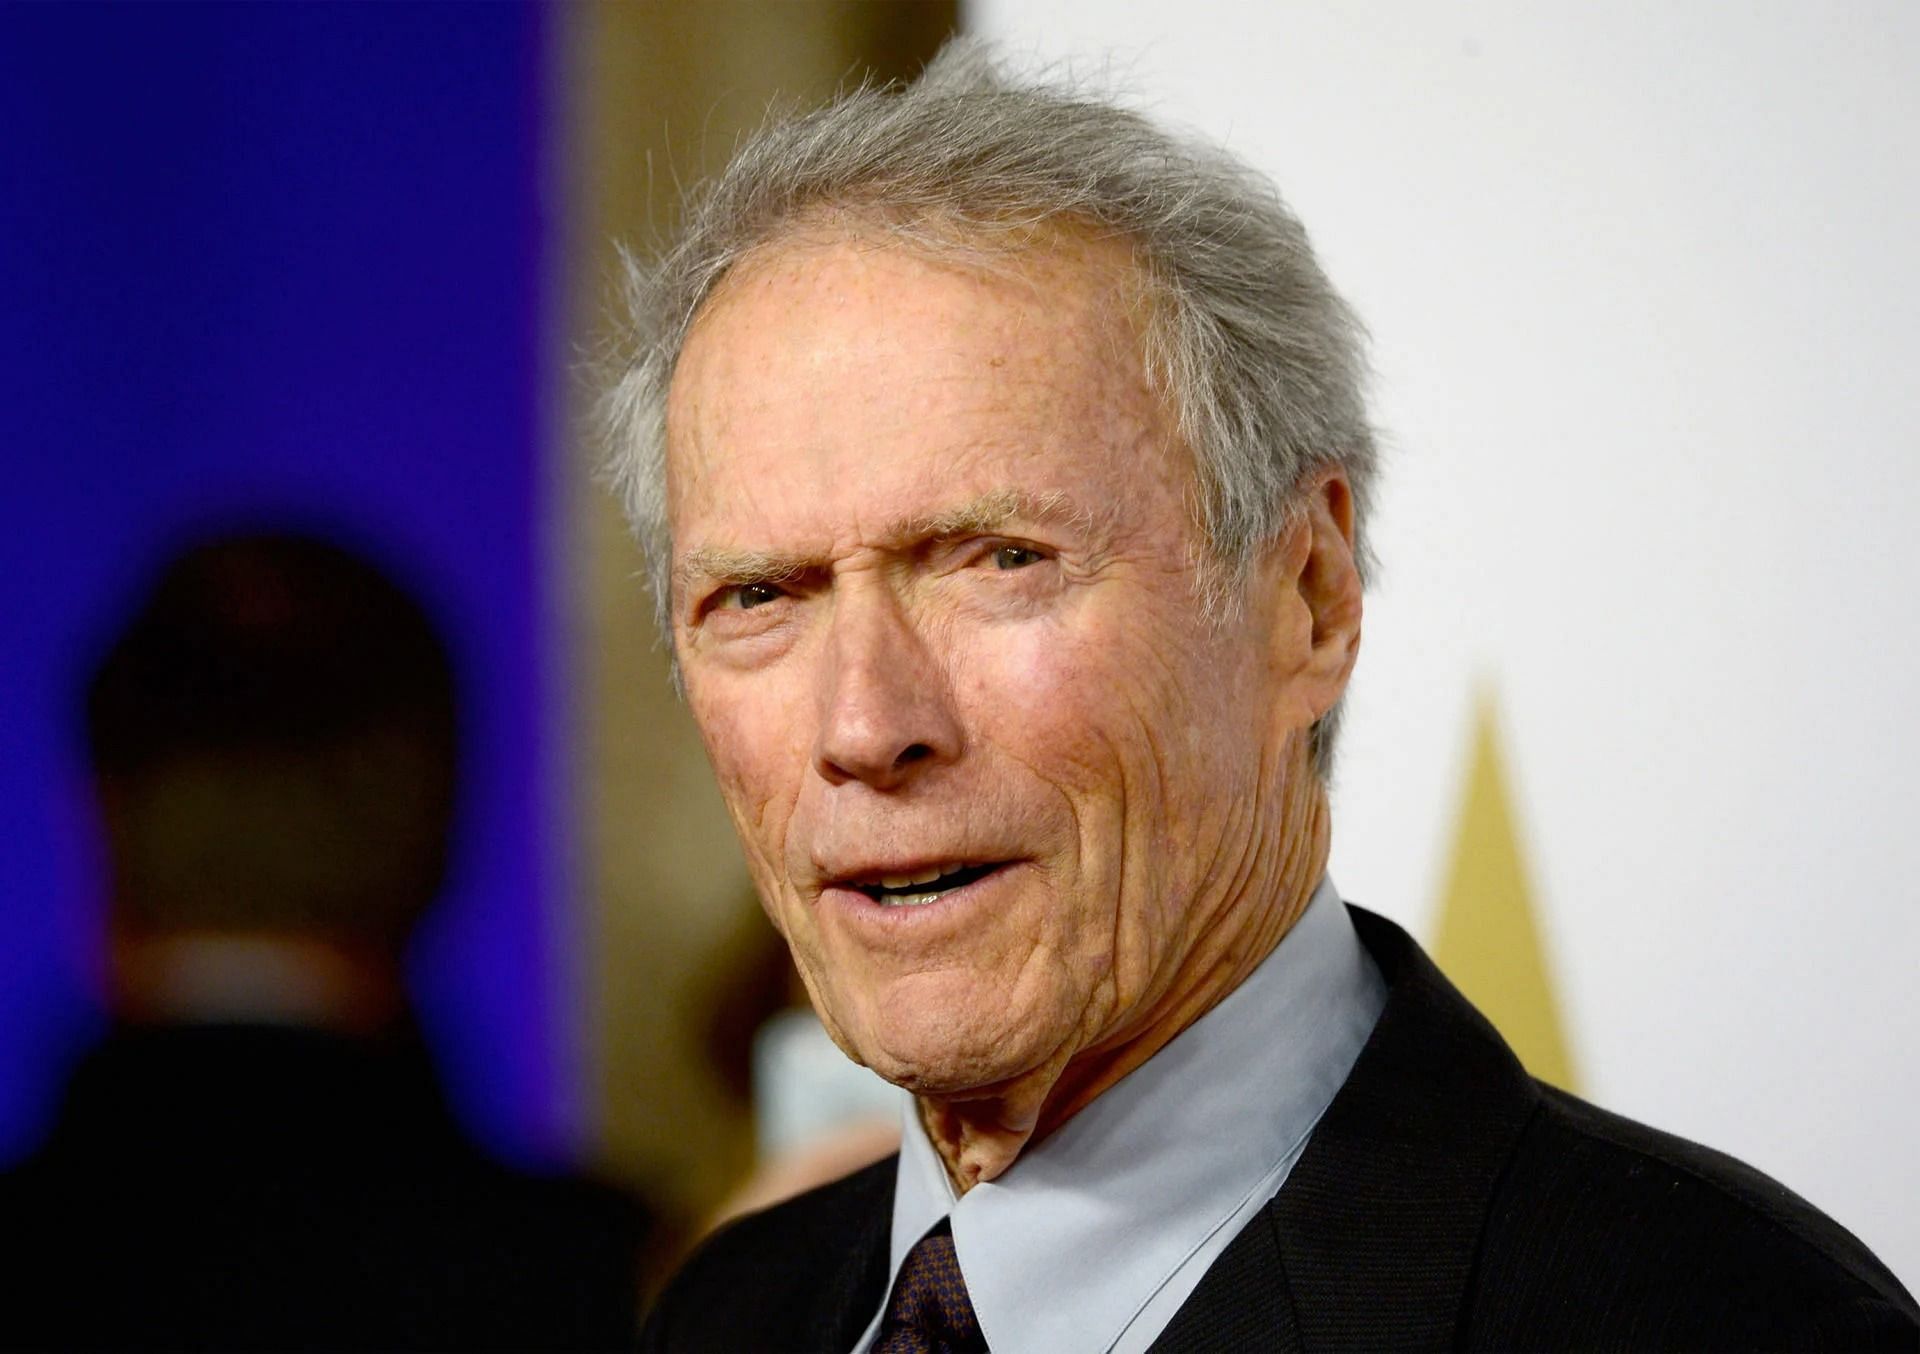 Clint Eastwood (Image via Frazer Harrison/Getty Images)